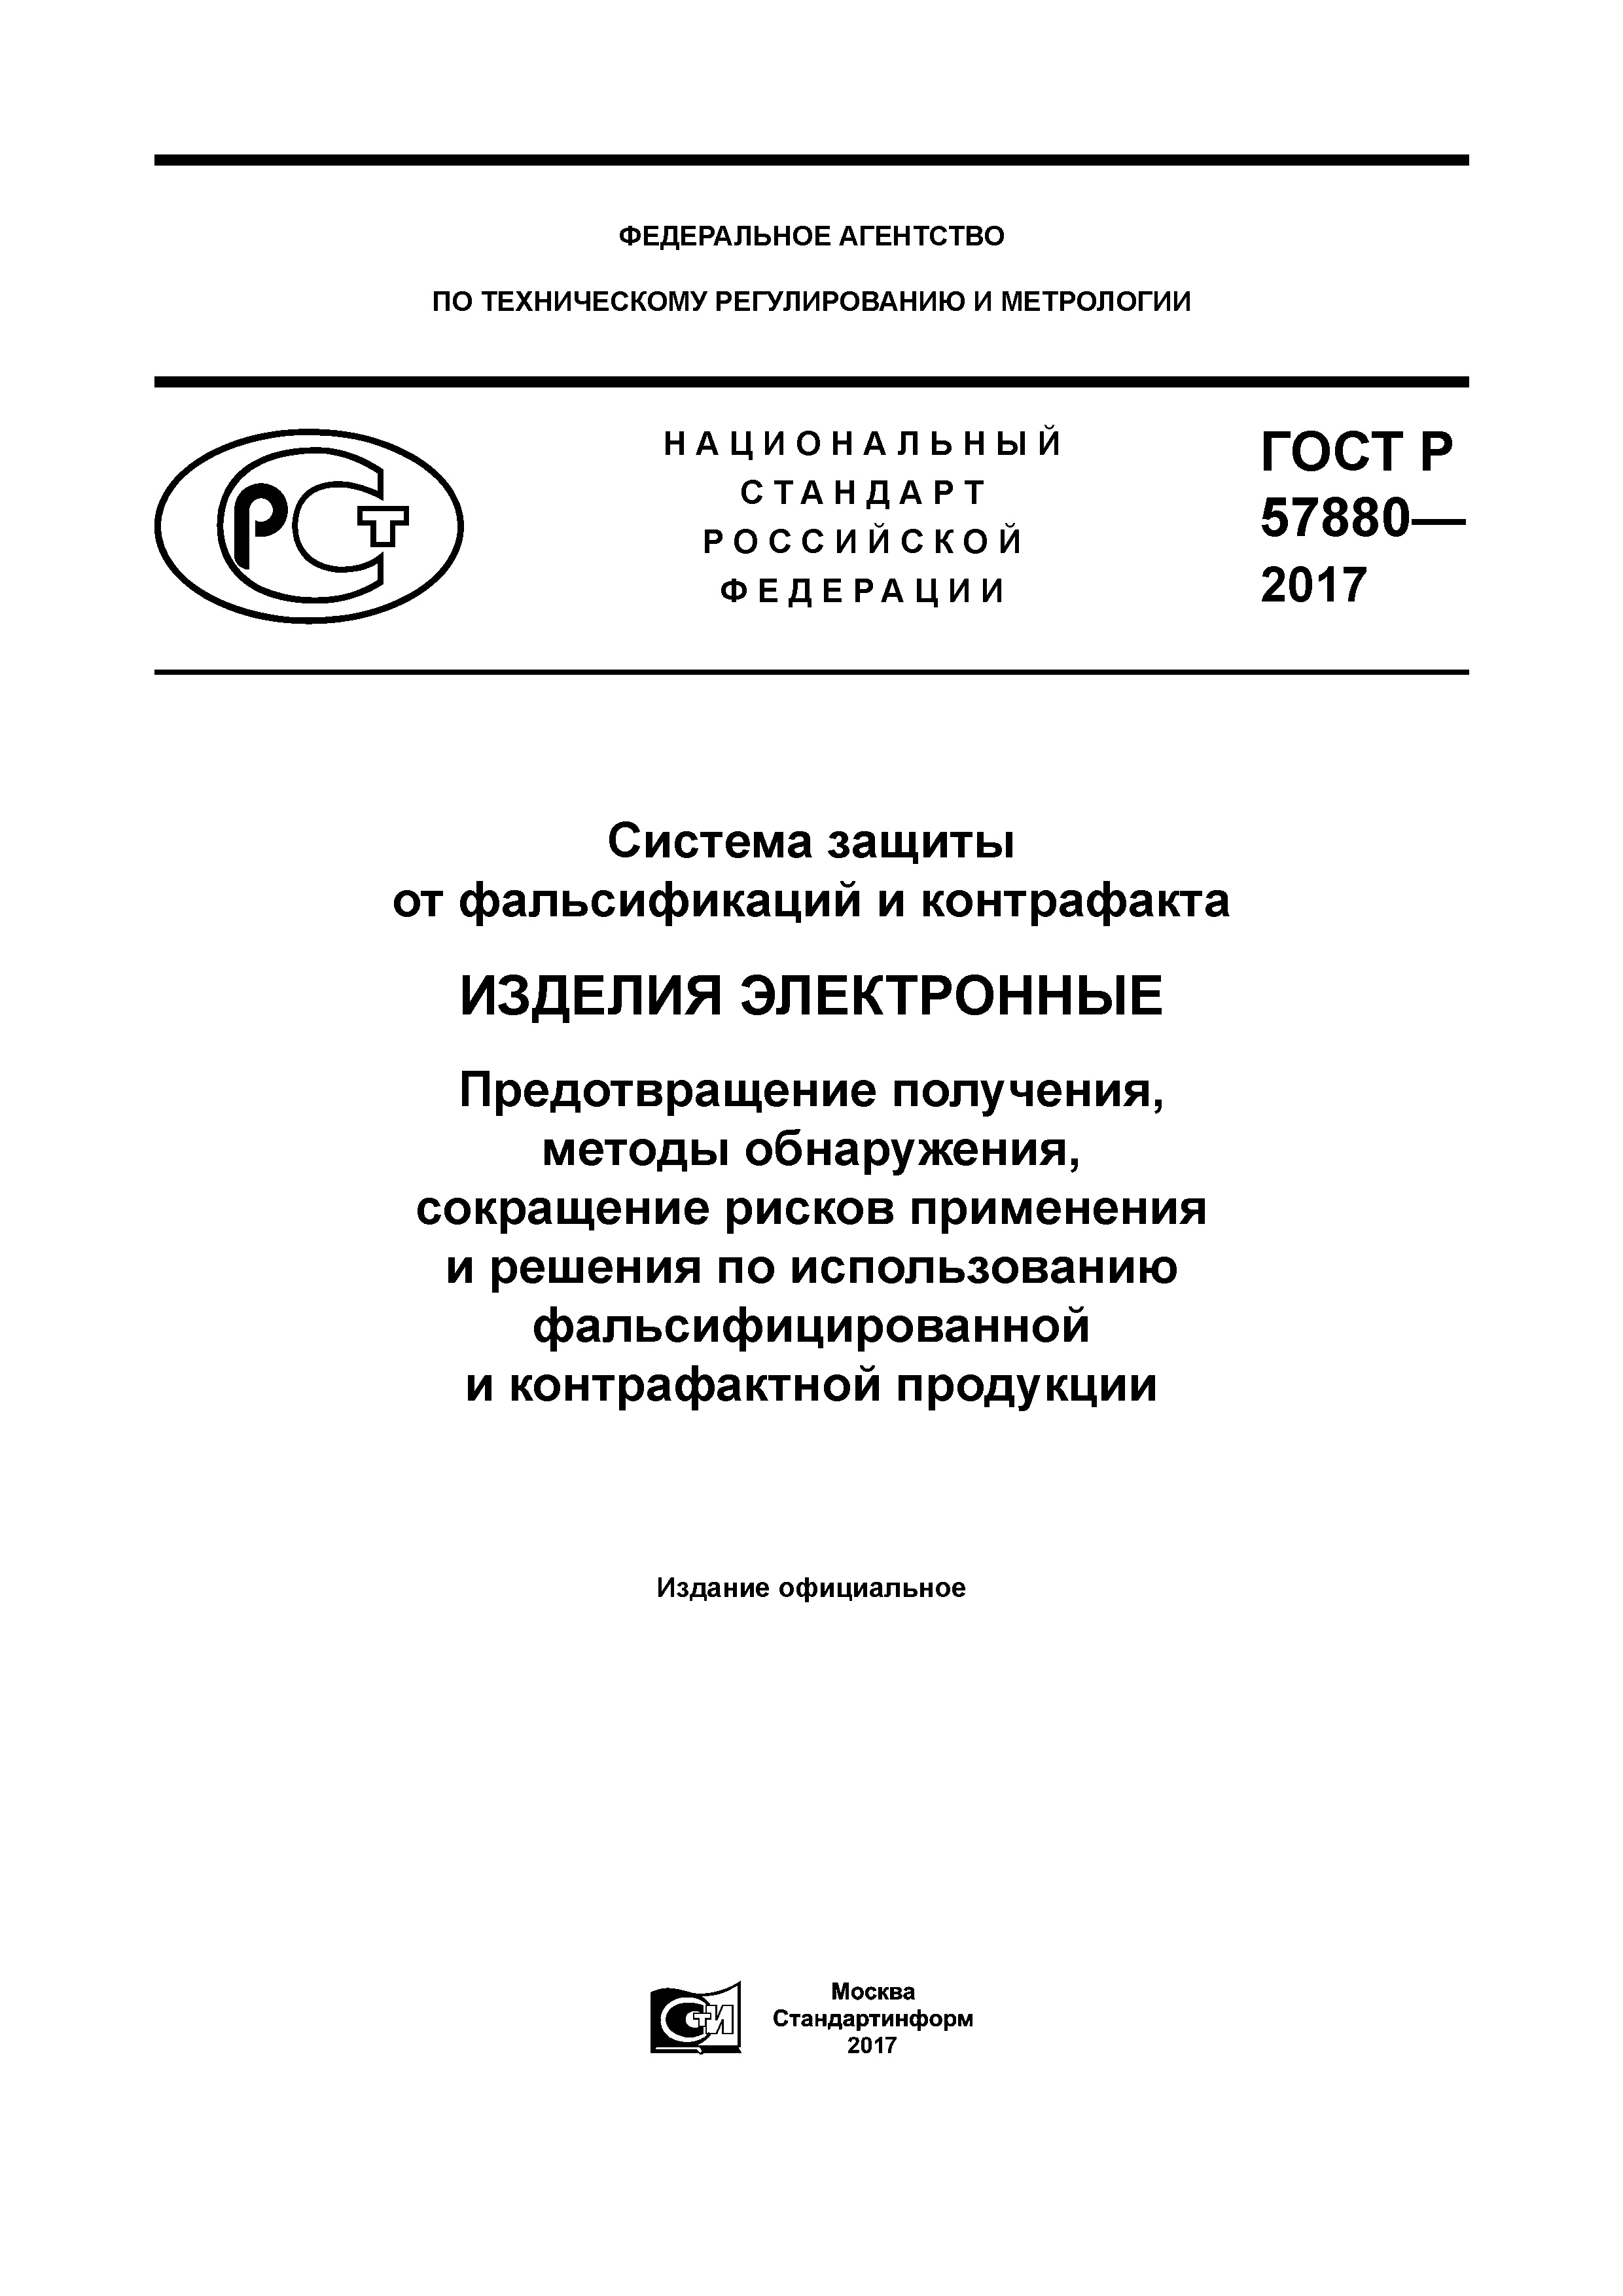 ГОСТ Р 57880-2017